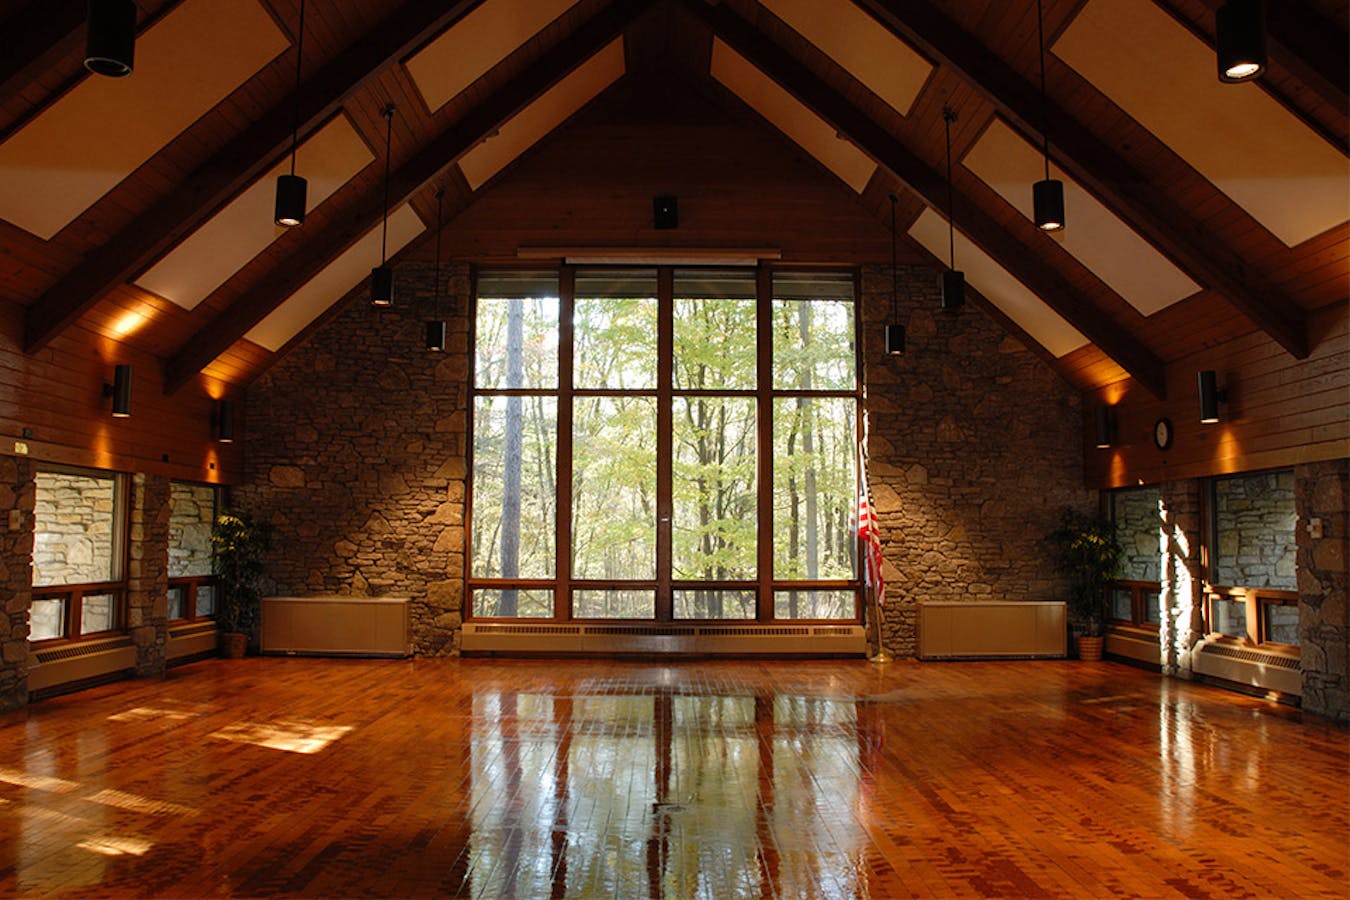 Oak Openings Lodge (photo courtesy of Metroparks Toledo)